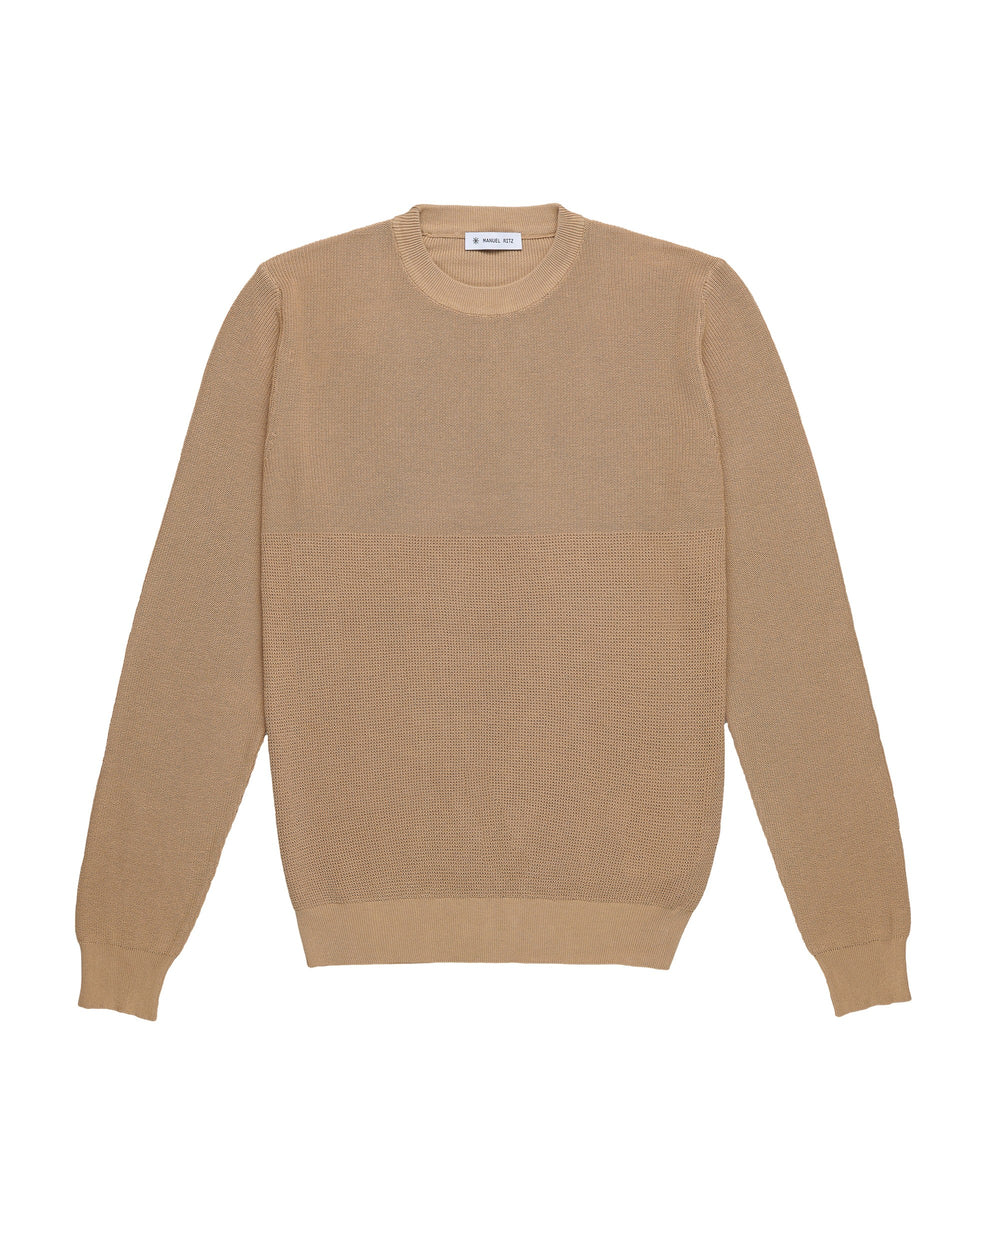 beige crew-neck sweater cotton crepe stitch mix